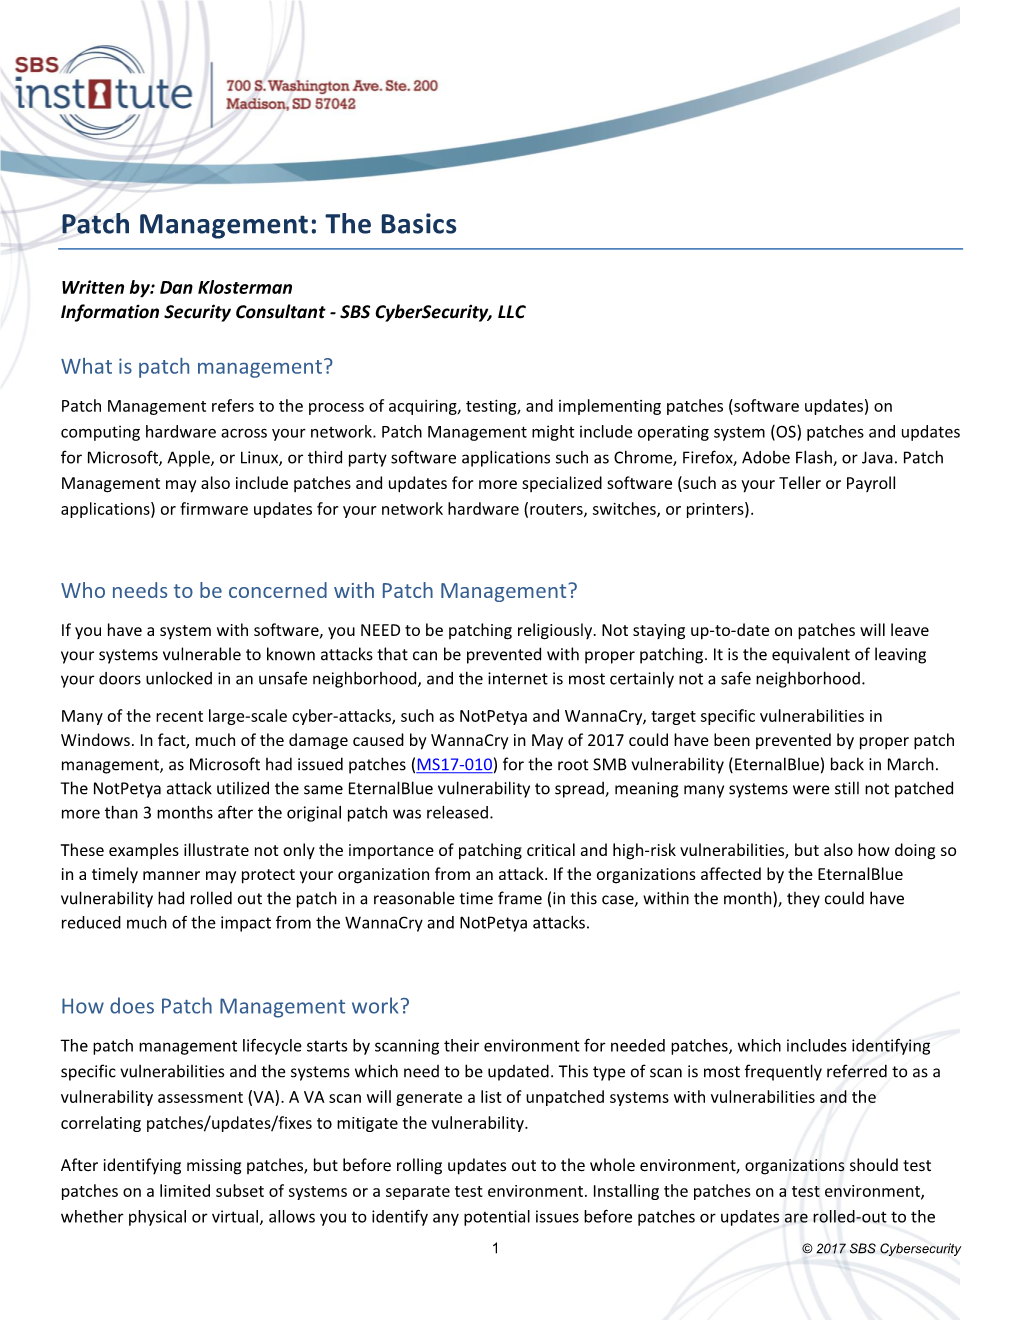 Patch Management: the Basics